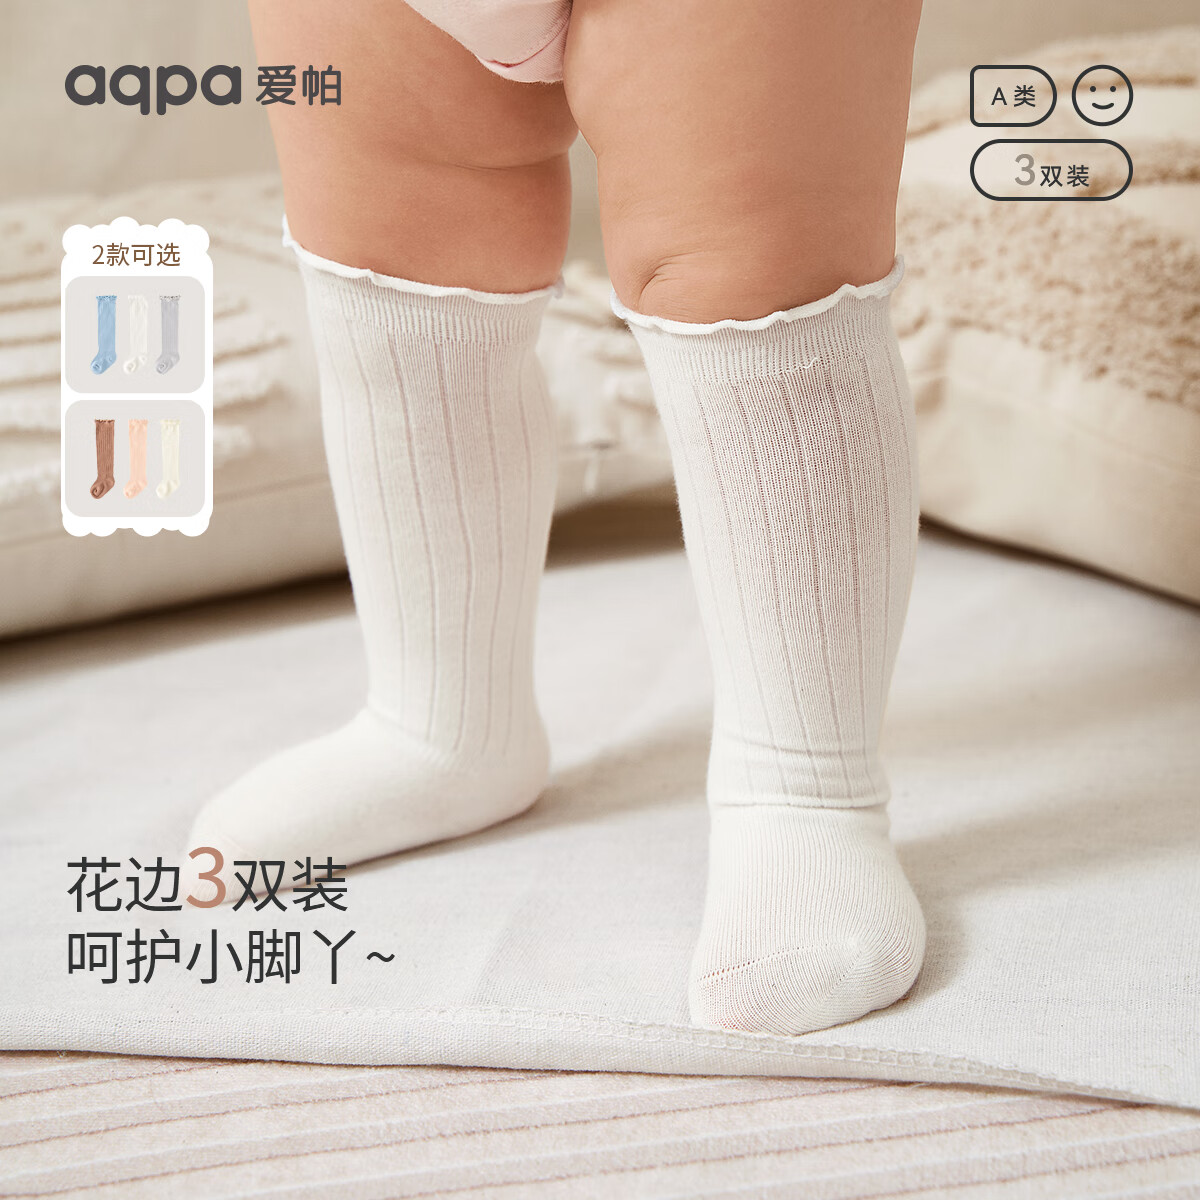 aqpa儿童袜子婴儿长筒袜春秋款宝宝新生儿过膝袜透气棉袜防蚊袜 淡兰白银灰 1-3岁